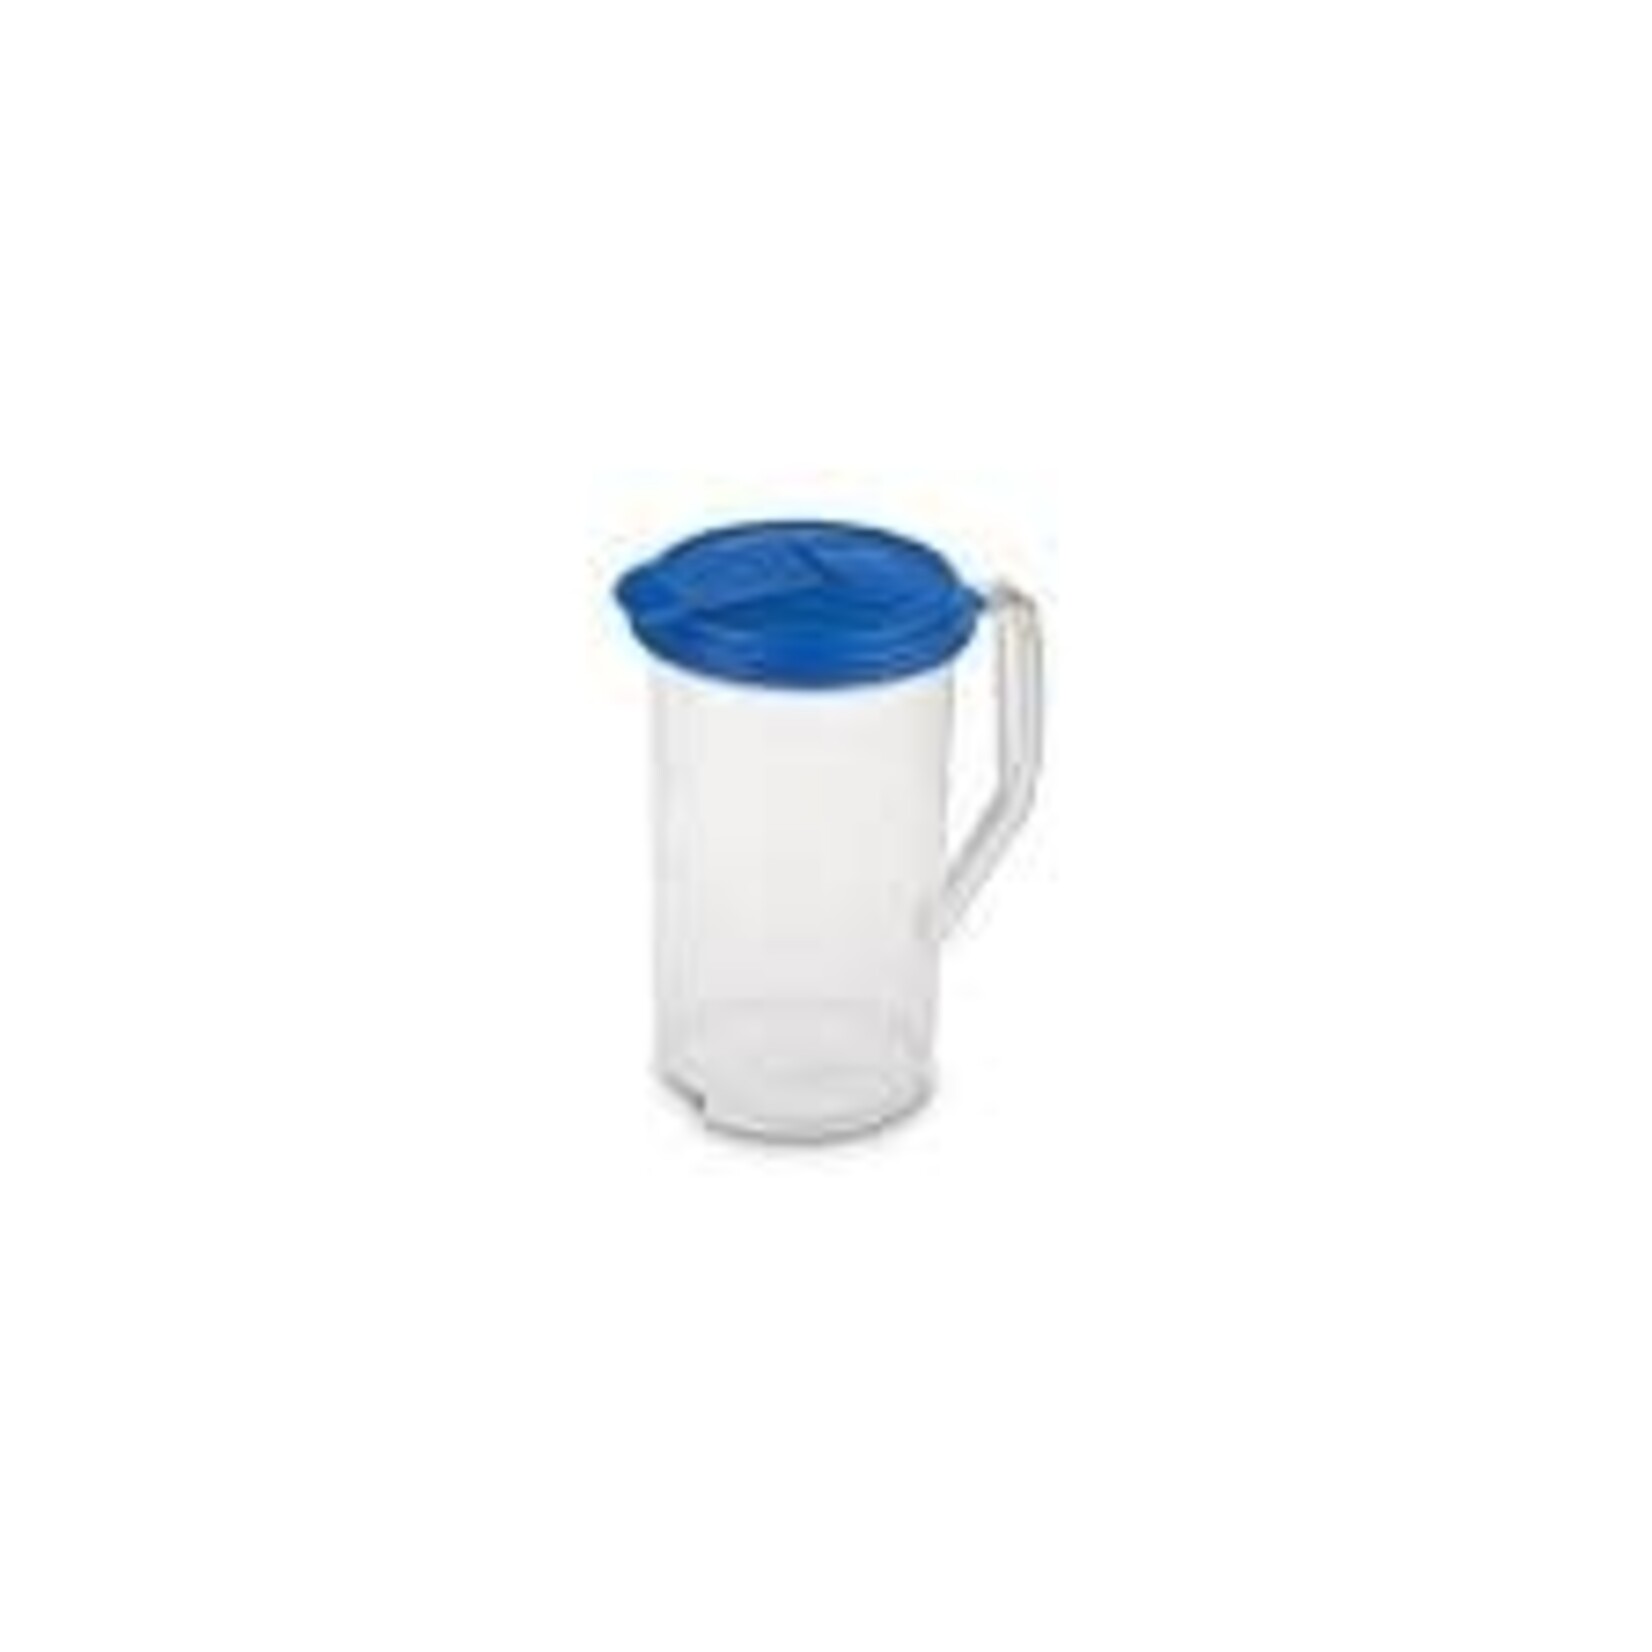 Sterilite 27516 FS 1 GALLON plastic pitcher round blue